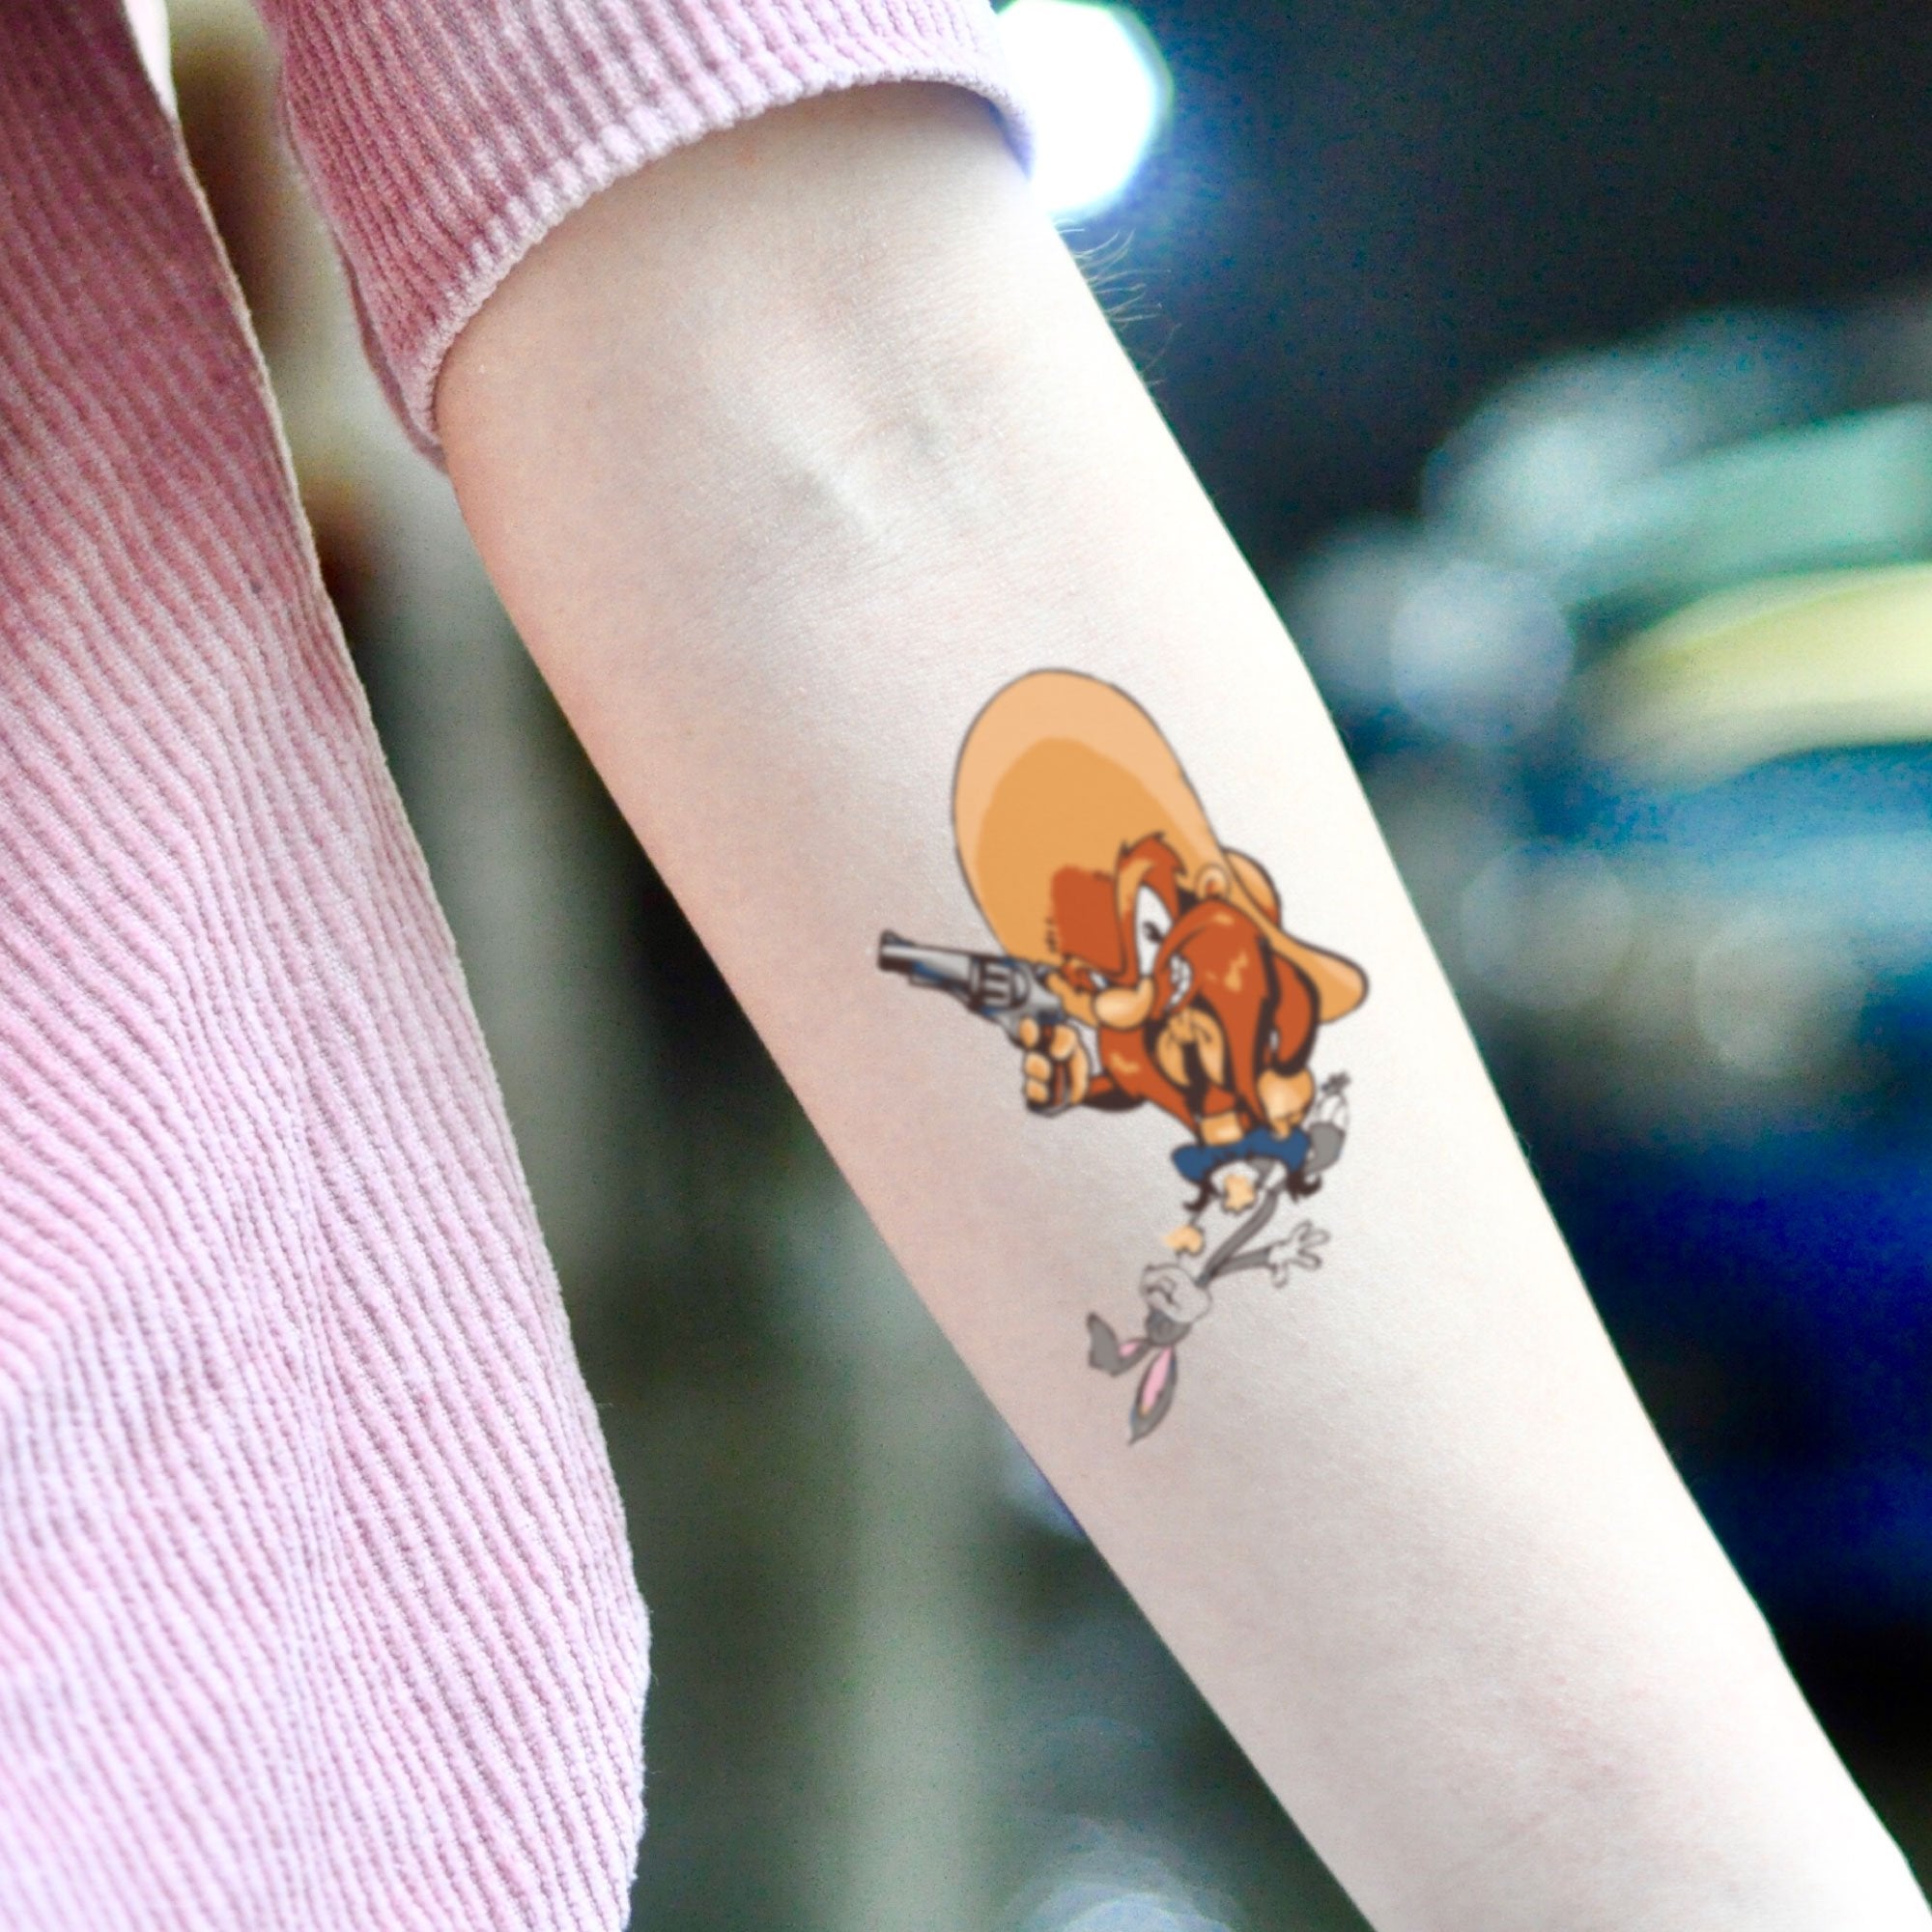 UPDATED: 40 Uplifting Winnie the Pooh Tattoos | Tattoos for daughters,  Matching friend tattoos, Friend tattoos small